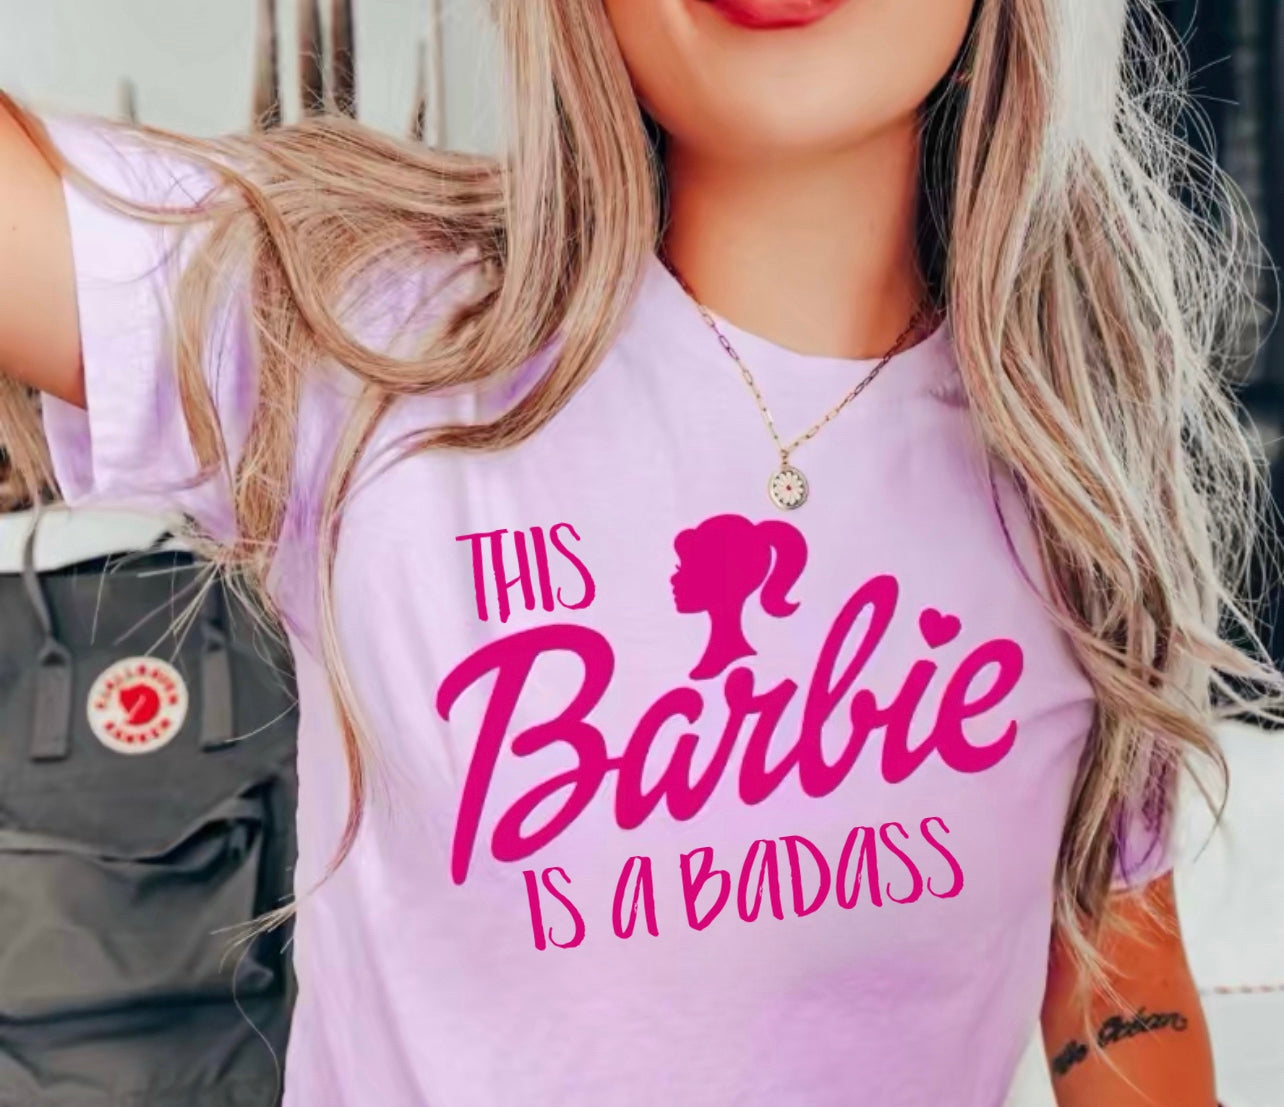 This barbie is a badass shirt| badass Barbie shirt| Gift for barbie fan| Barbie tee| Barbie Girl shirt